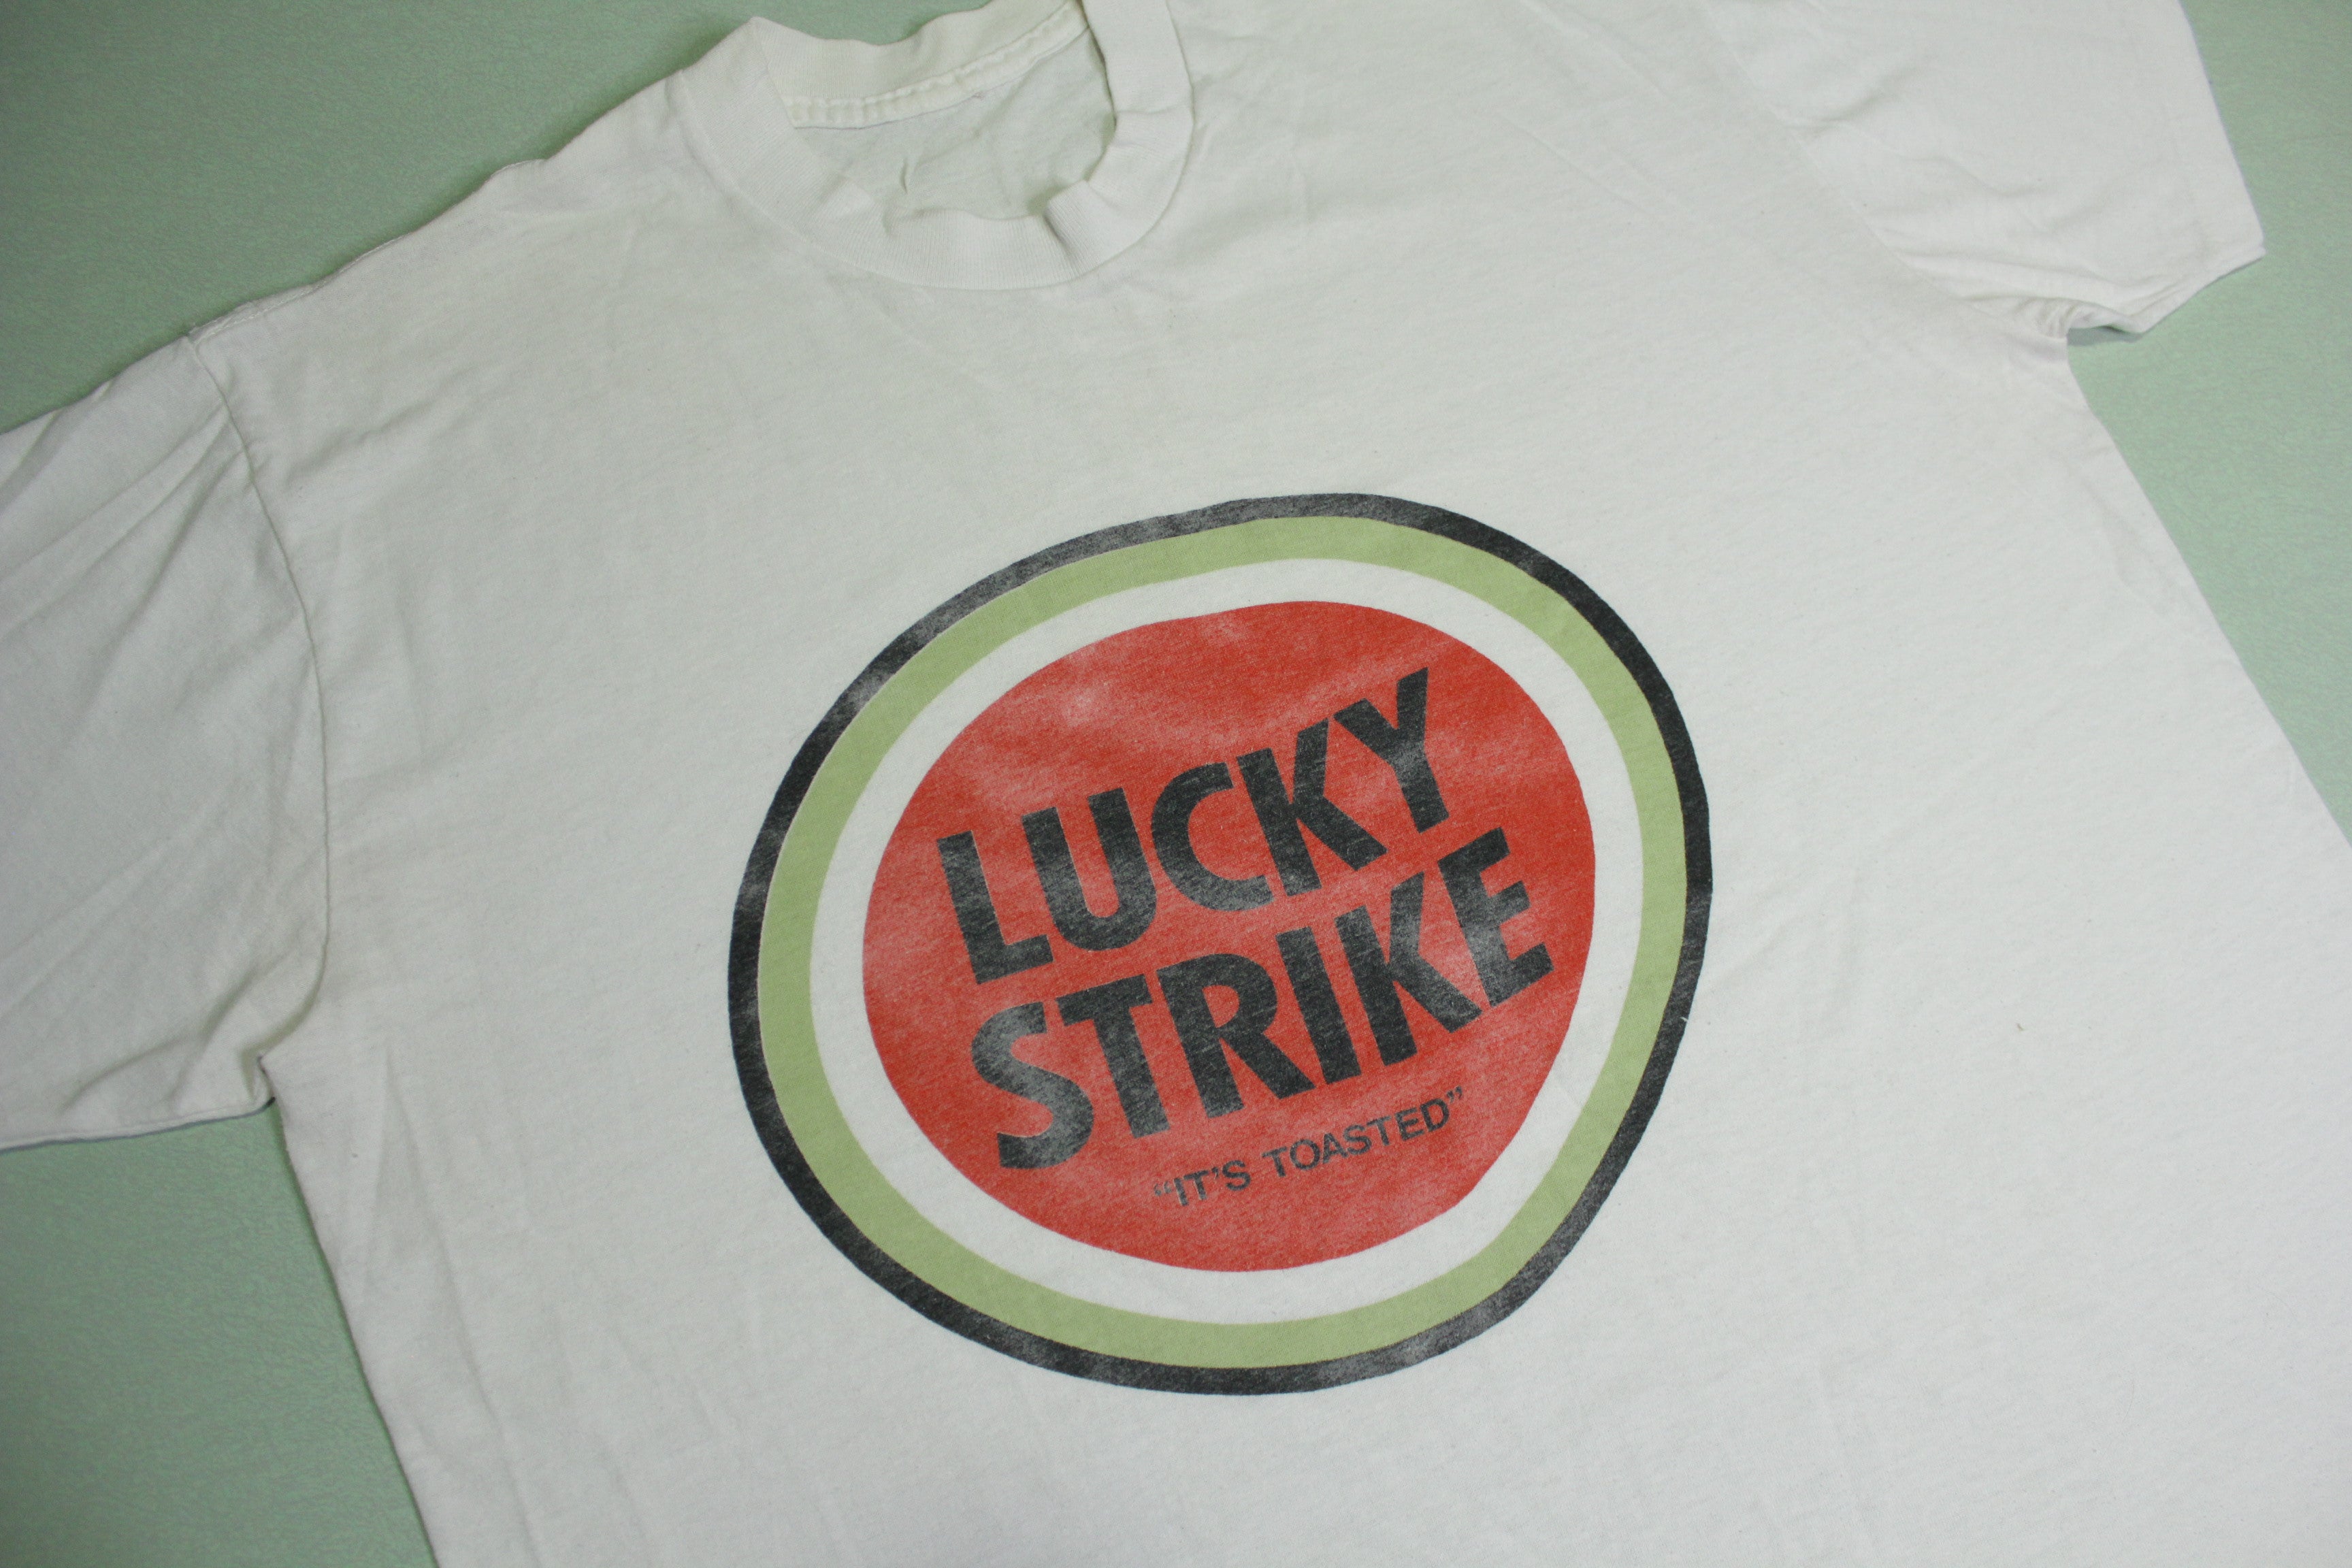 Lucky Strike 